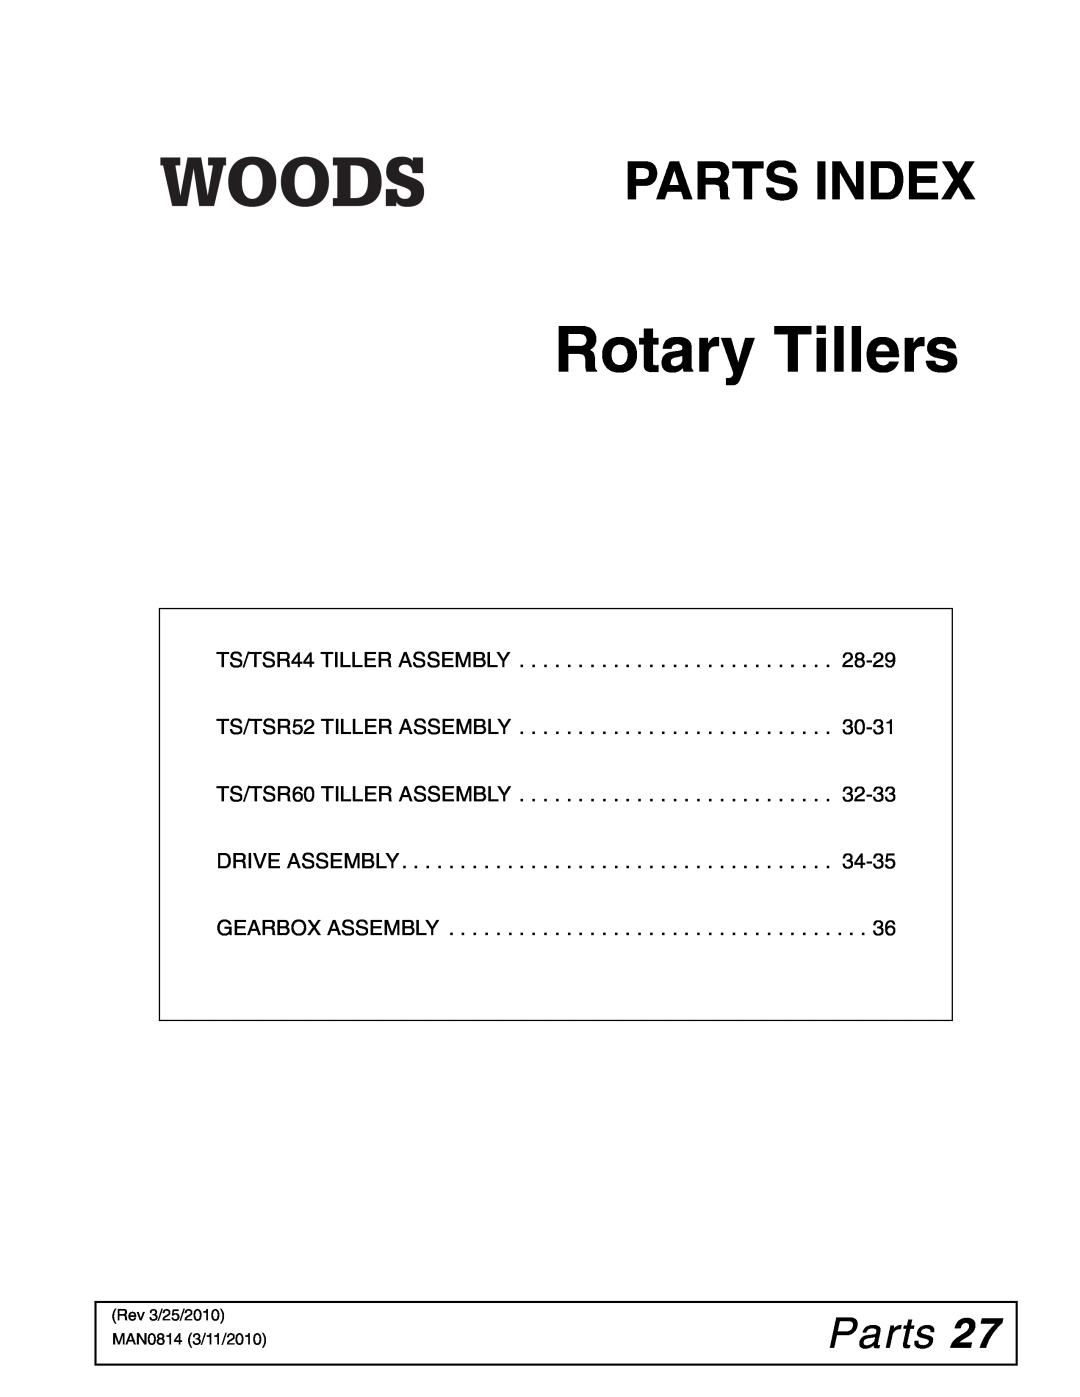 Woods Equipment TS44 Parts, TS/TSR44 TILLER ASSEMBLY, 28-29, TS/TSR52 TILLER ASSEMBLY, 30-31, TS/TSR60 TILLER ASSEMBLY 